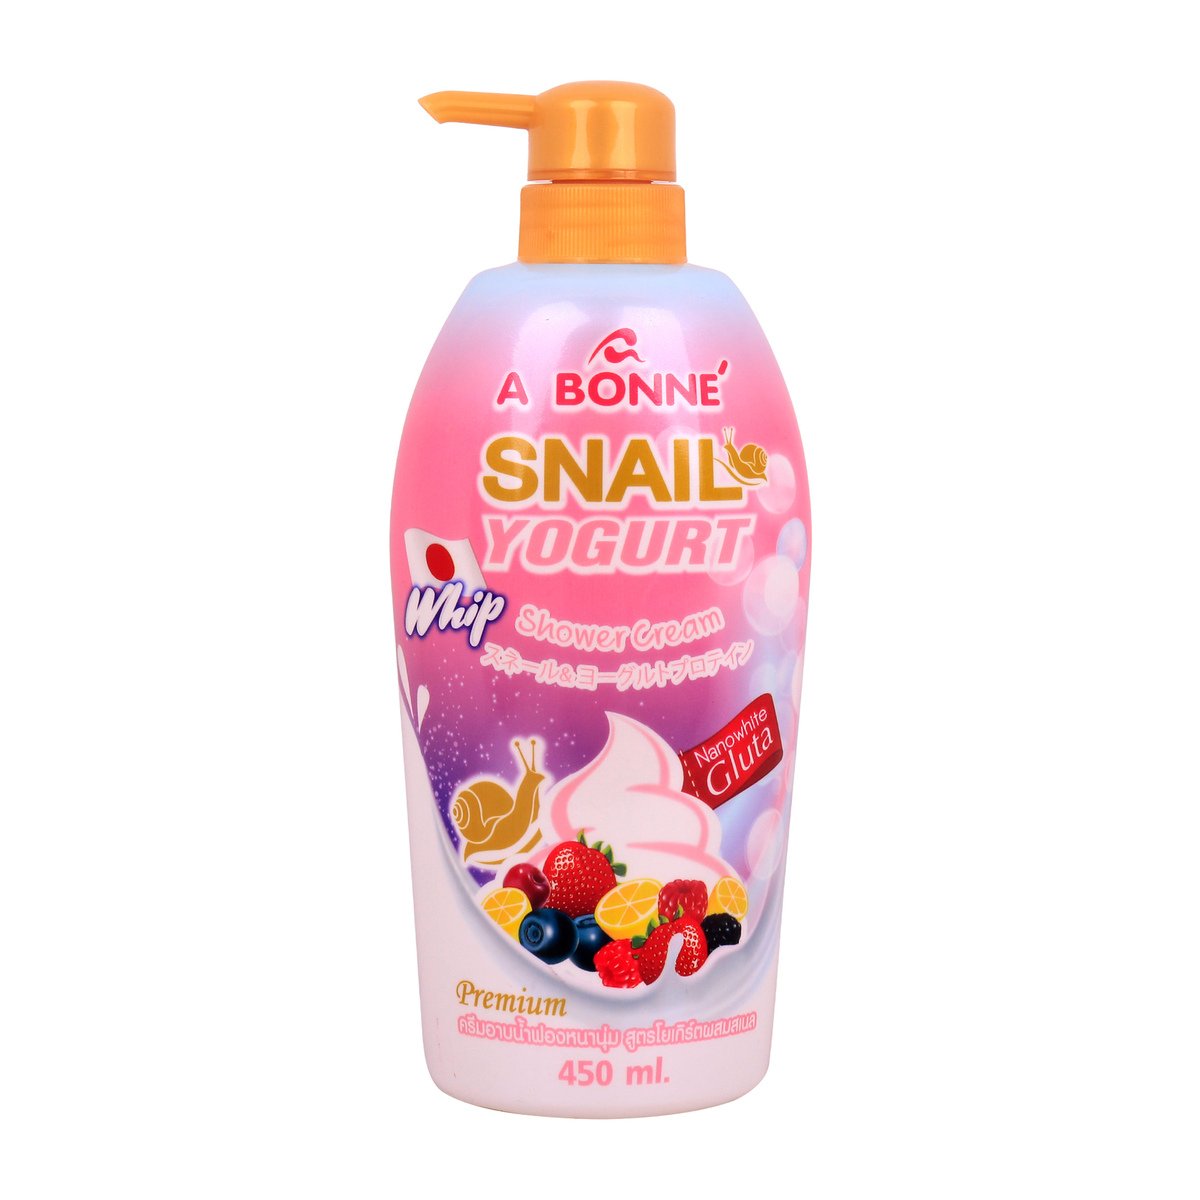 A Bonne Snail Yogurt Whip Shower Cream 450 ml